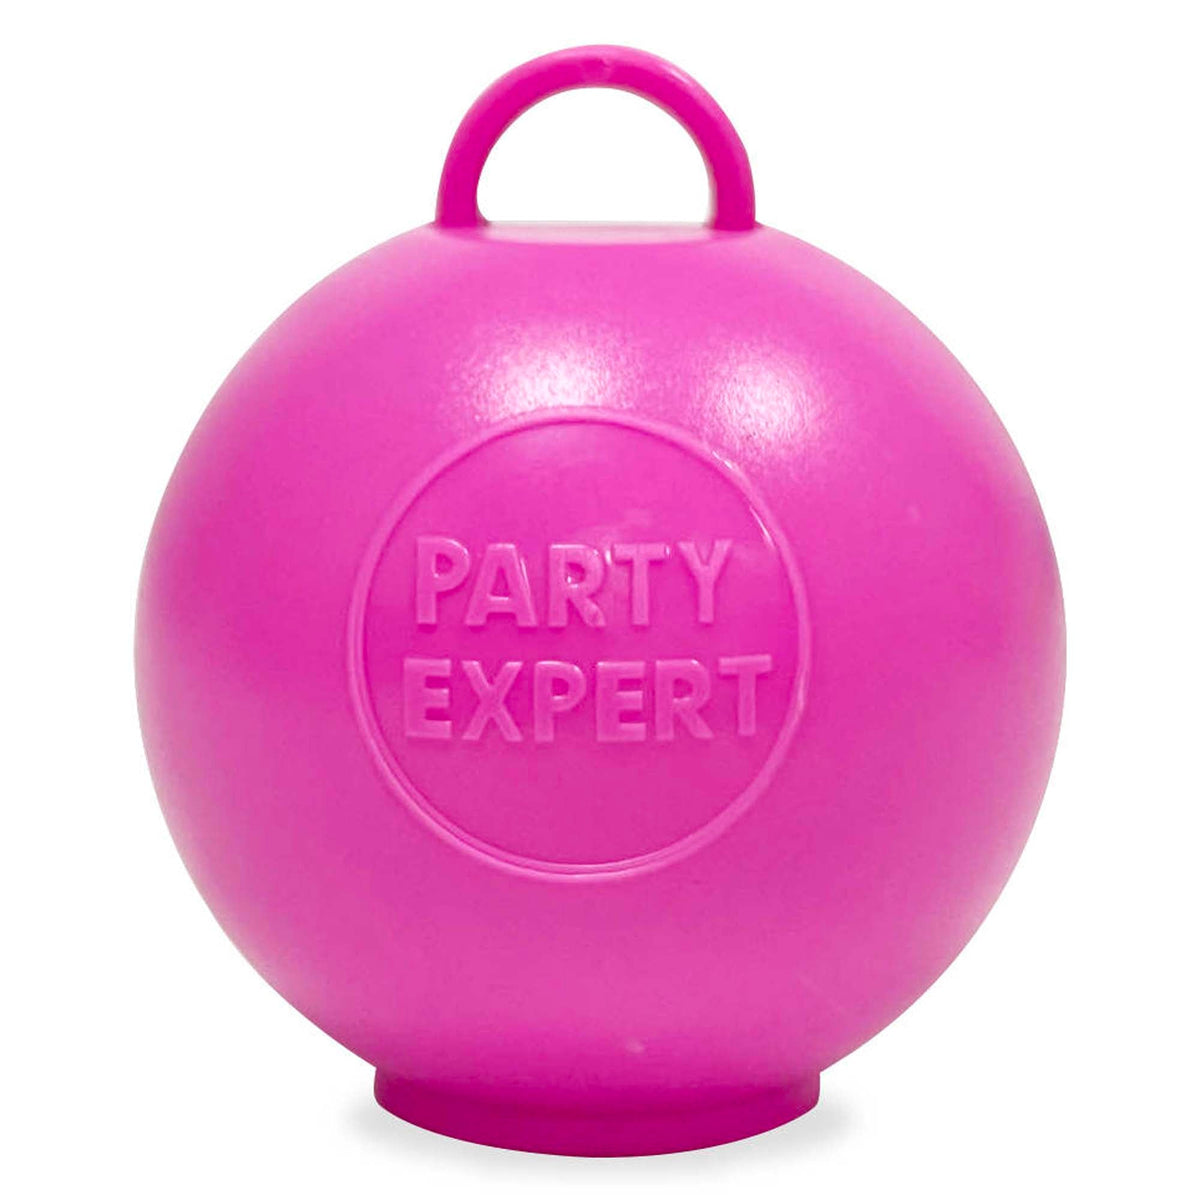 Dongguan Caipai Plastic Hardware Balloons Fuchsia Pink Bubble Balloon Weight, 1 Count 810077659496